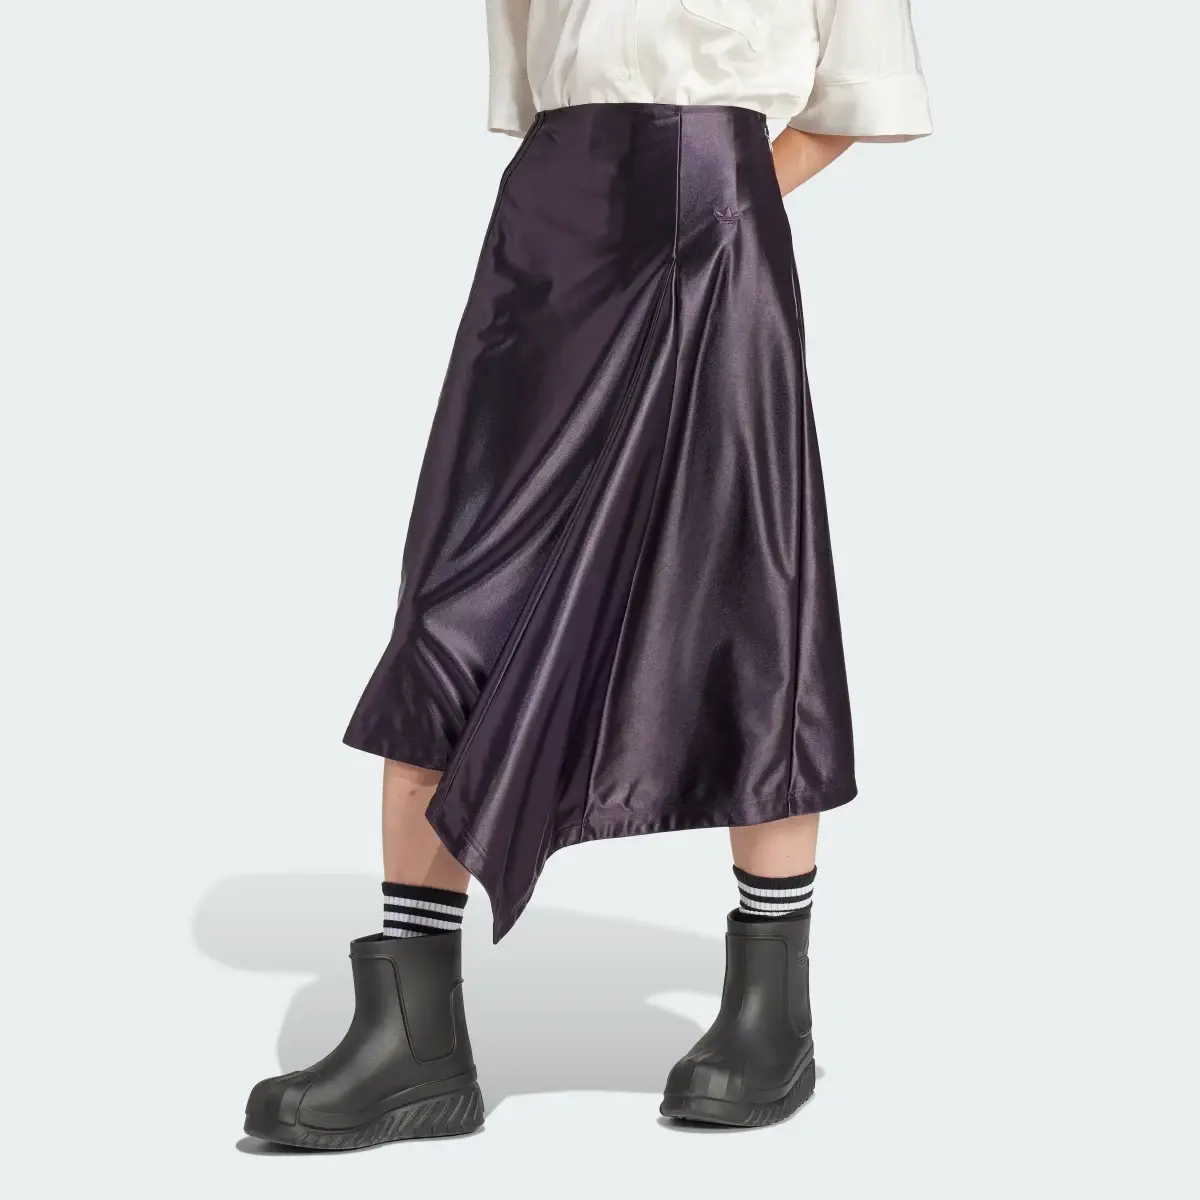 Adidas High-Waisted Satin Skirt. 1